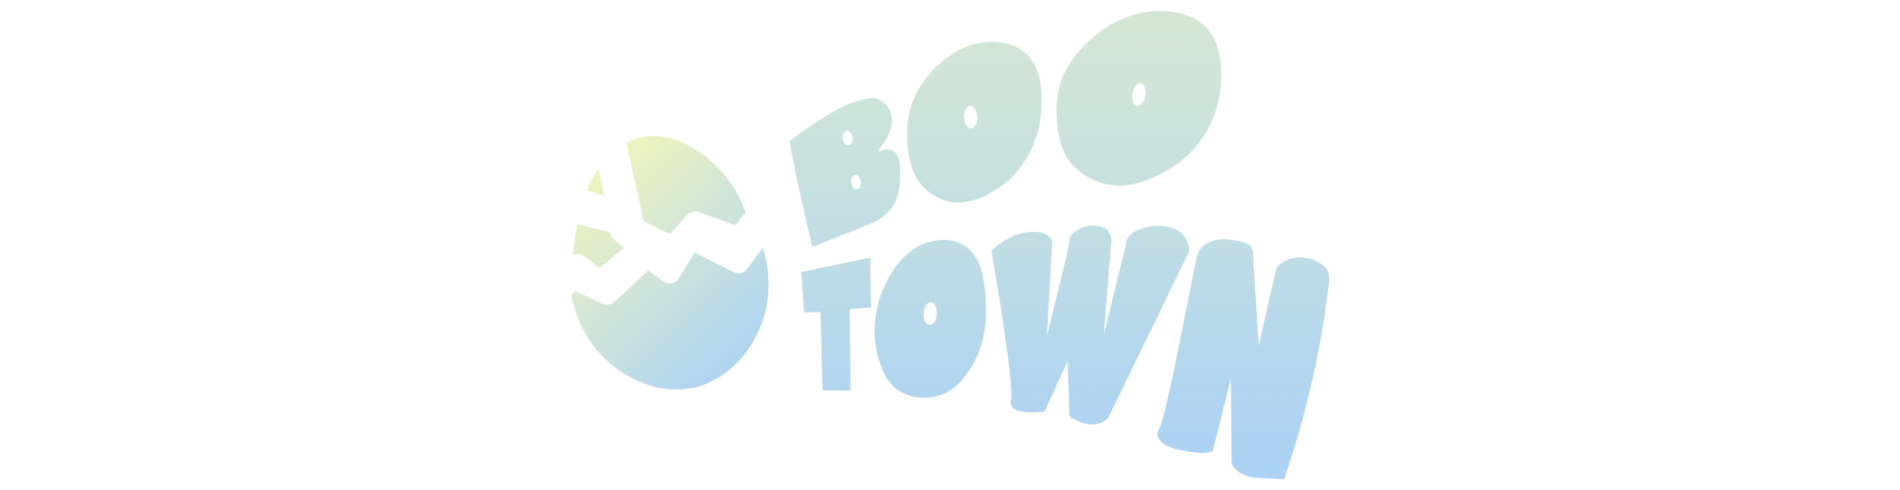 BooTown